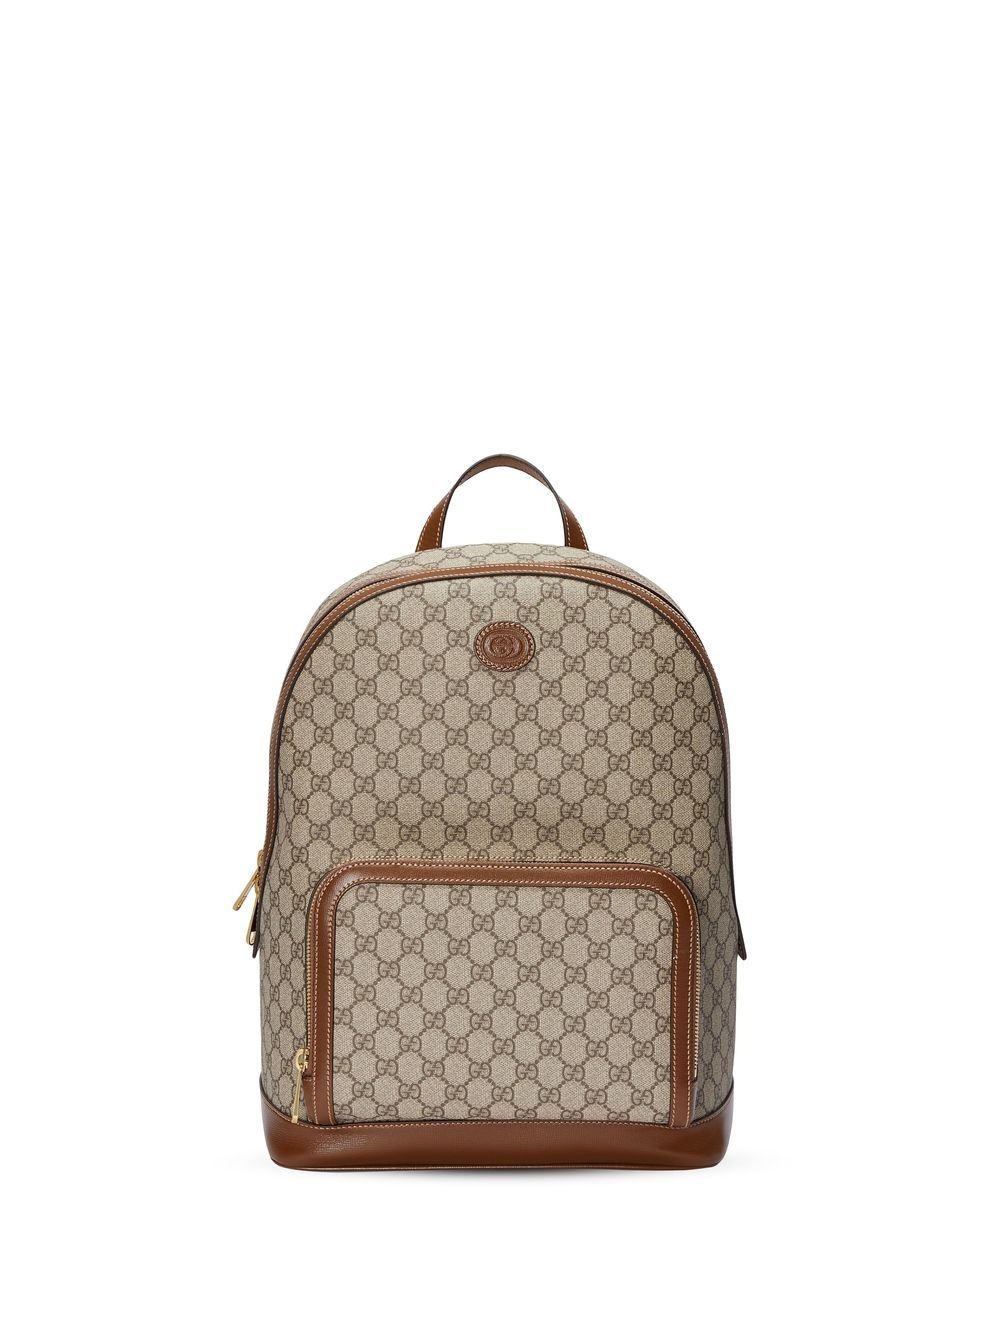 GG Supreme canvas backpack - 1